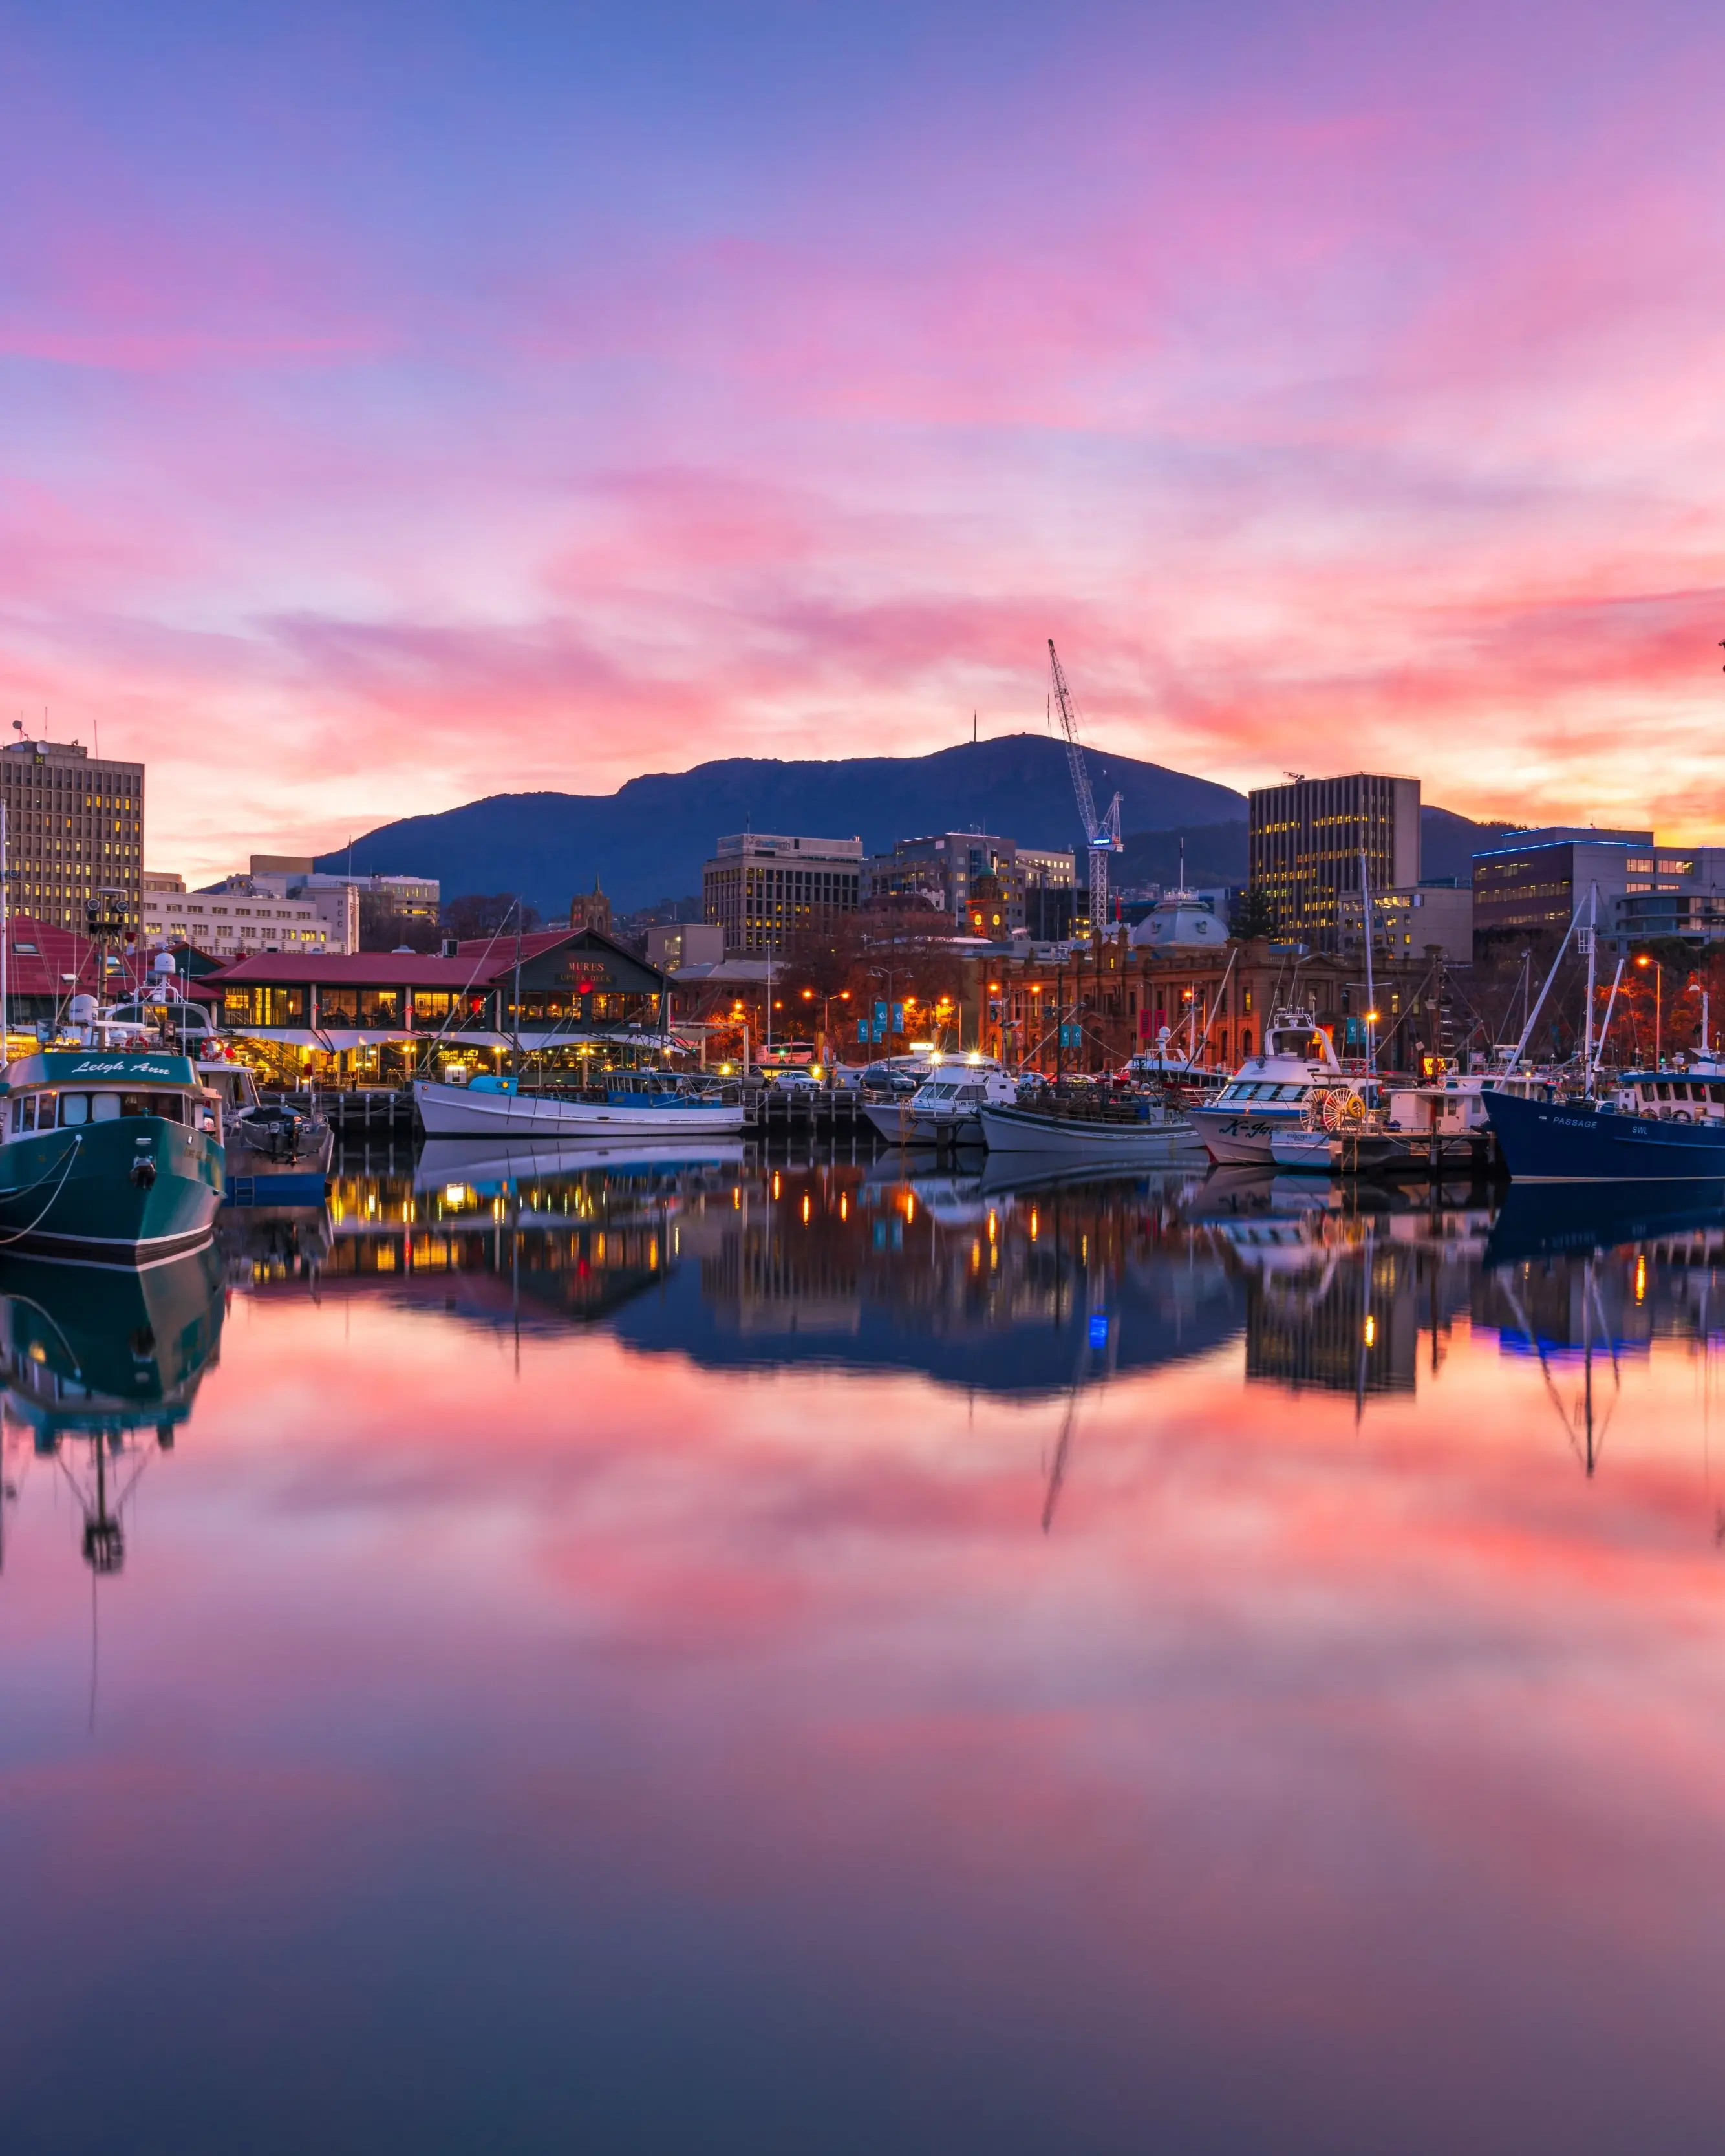 Hobart waterfront at sunset with city skyline and fishing boats. Image credit: Tourism Tasmania/Luke Tscharke